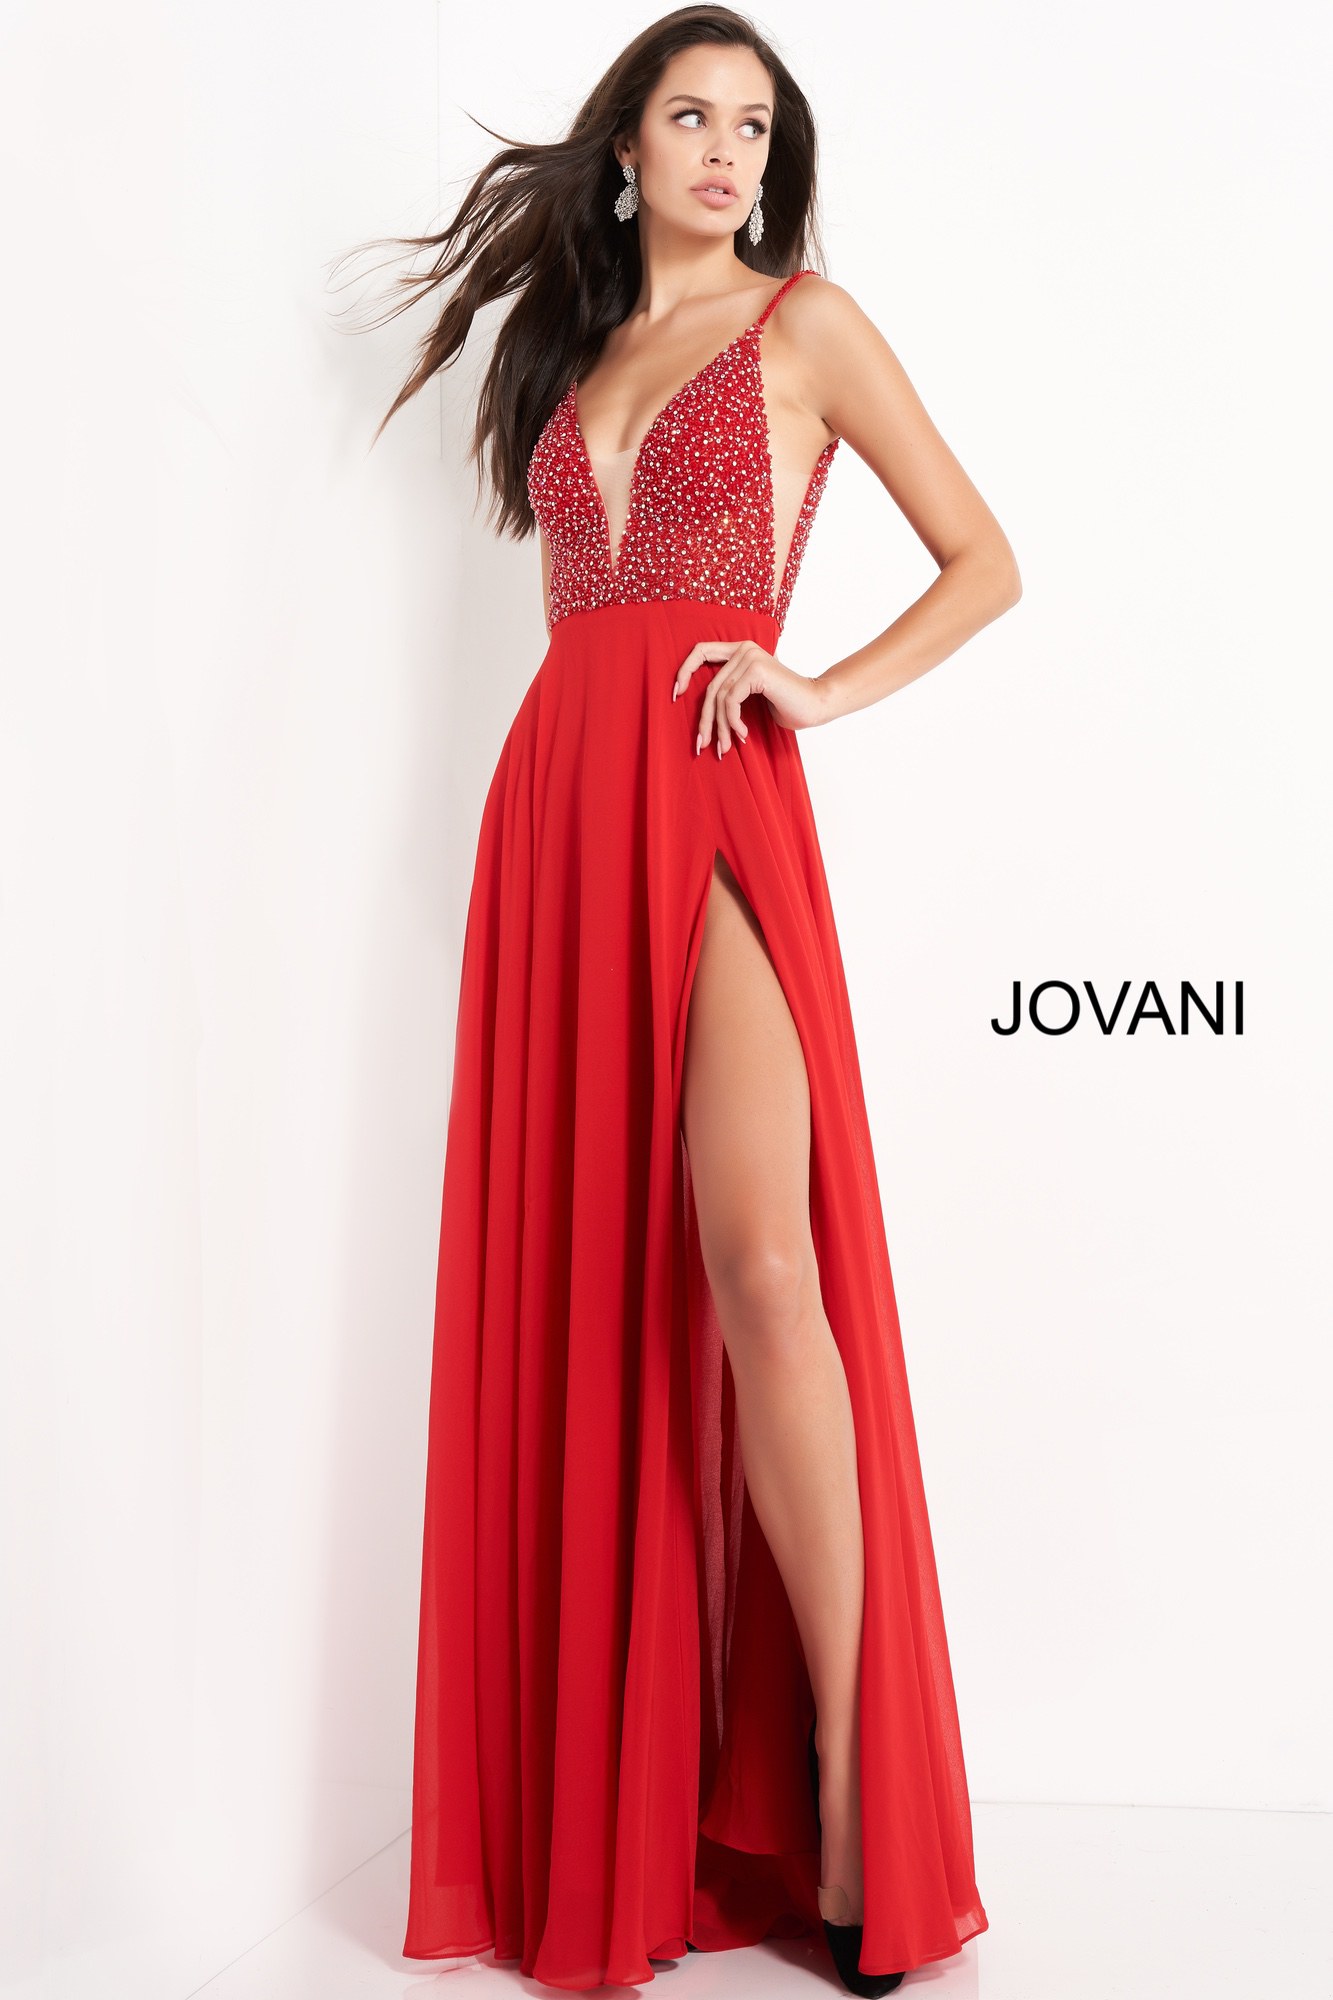 Jovani 04091 Red Chiffon High Slit Skirt Prom Dress